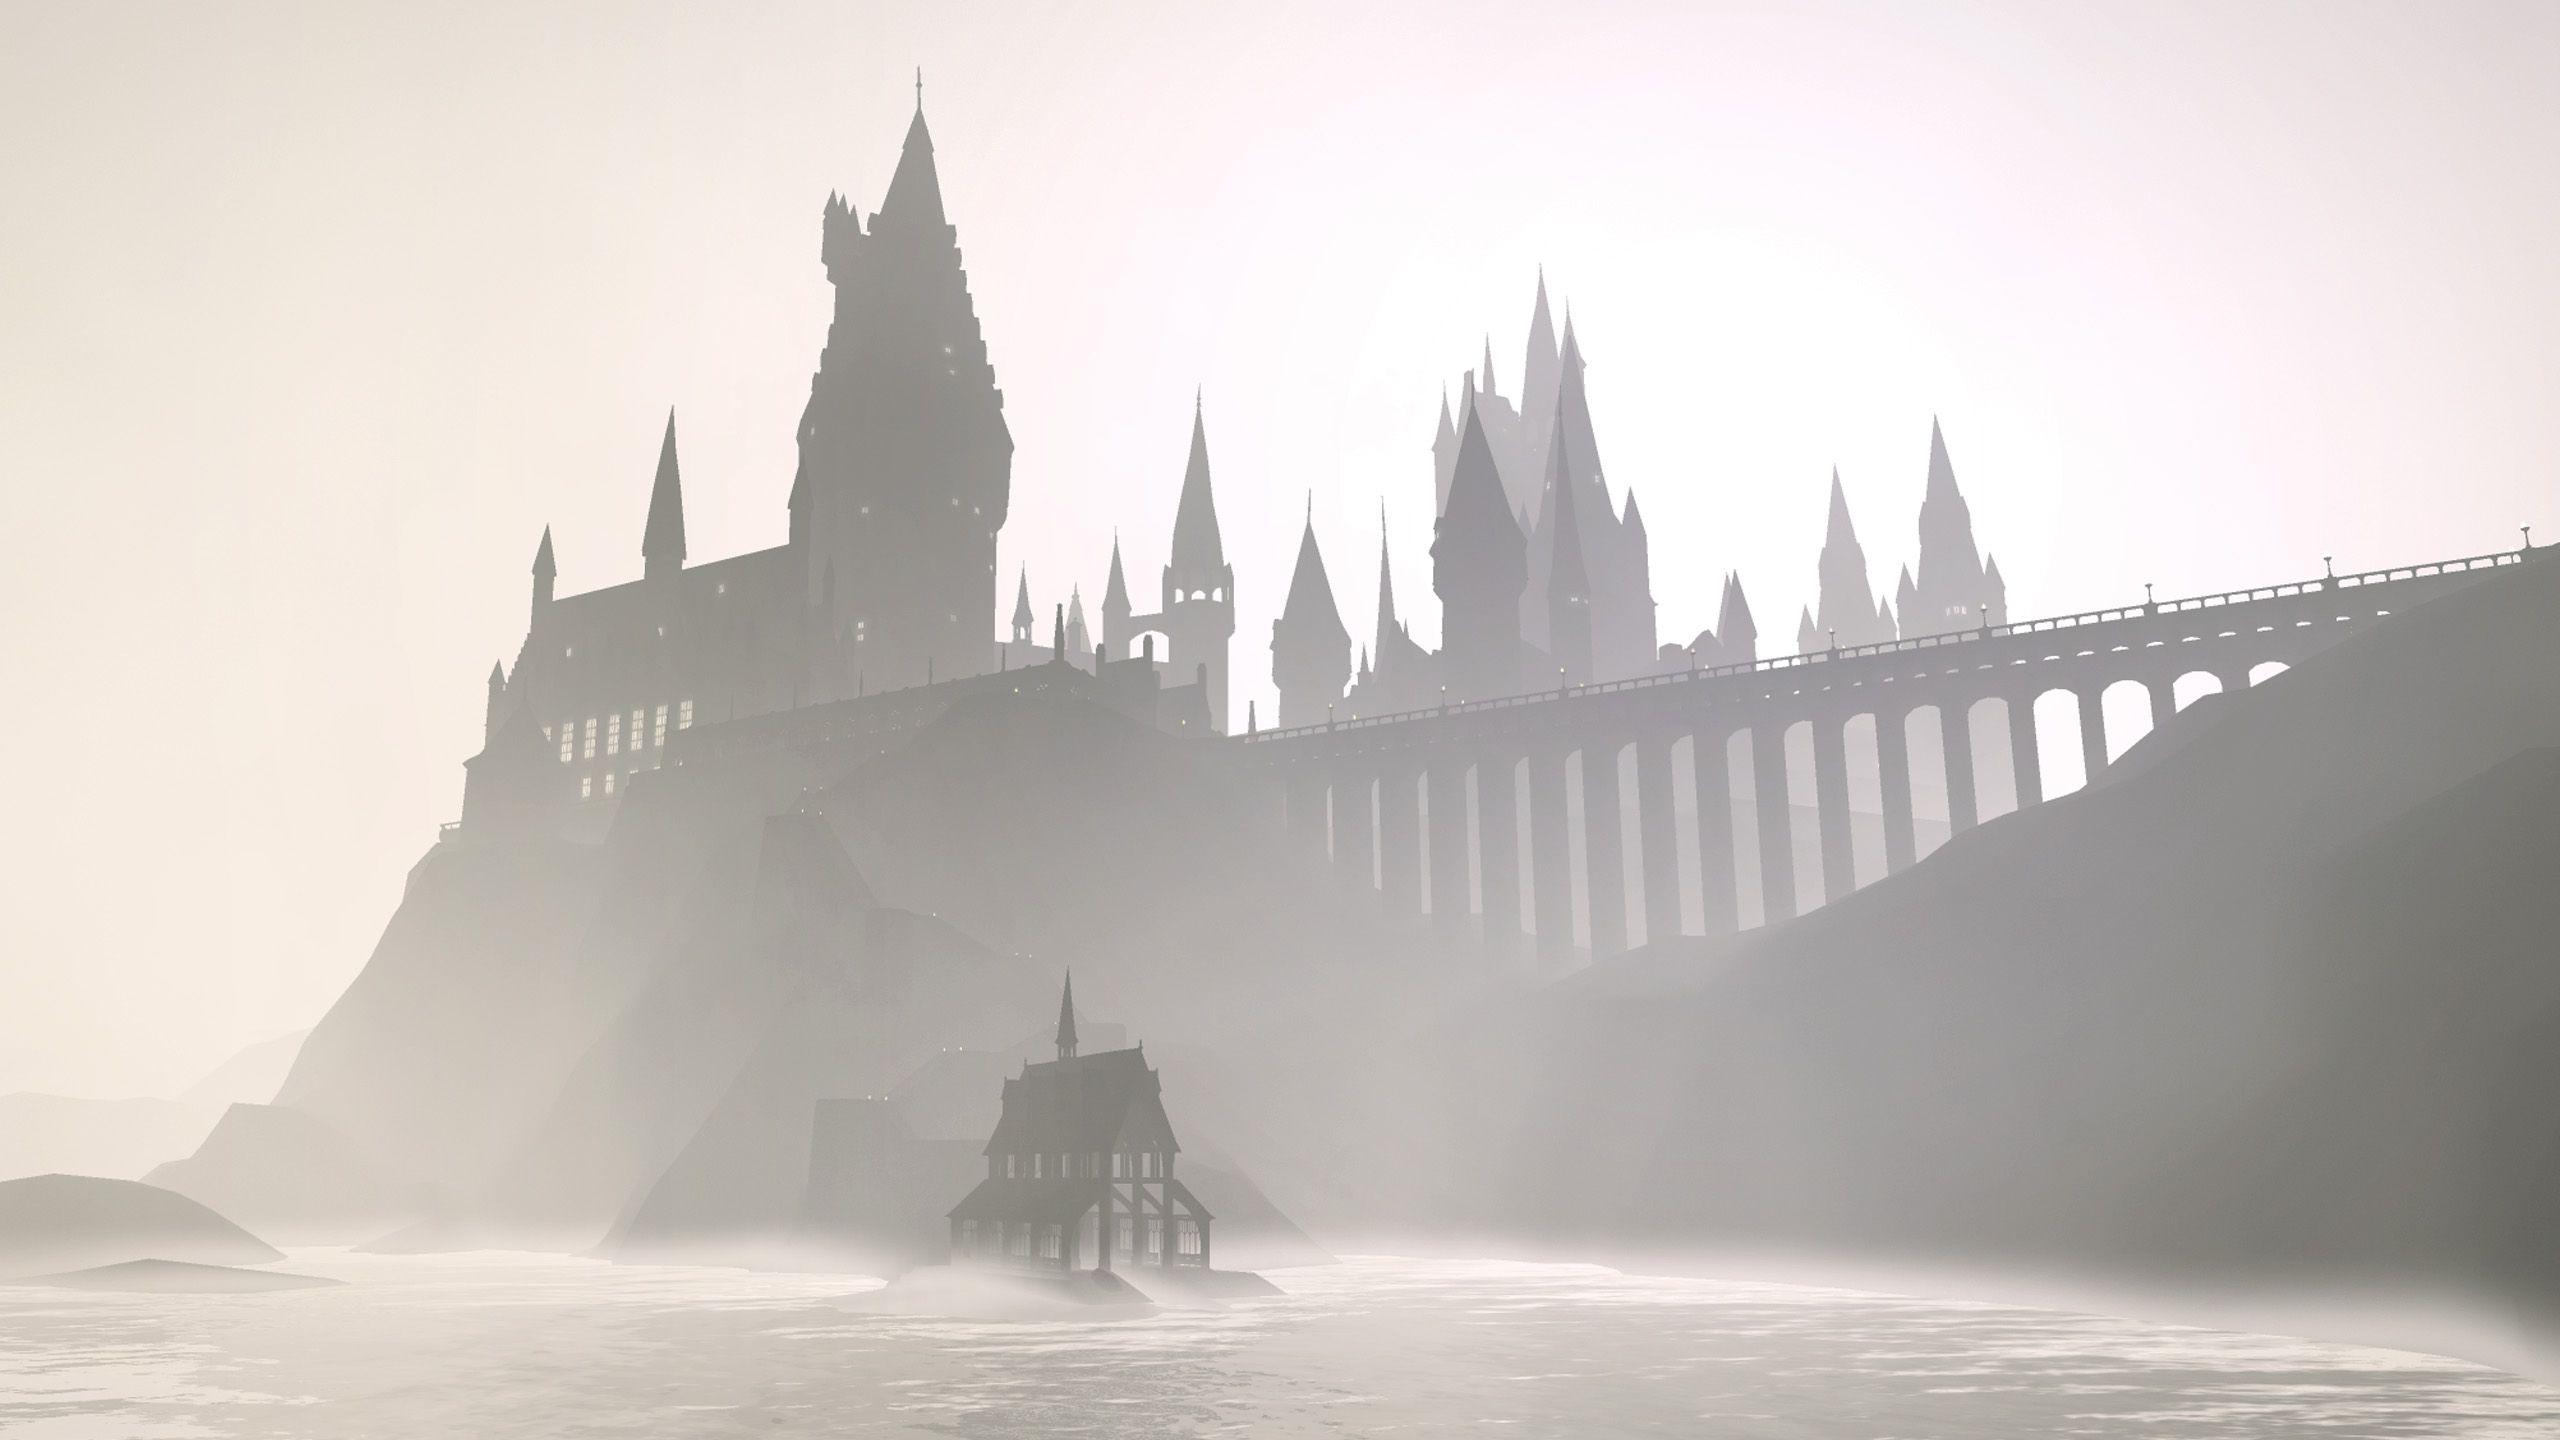 Harry Potter fans can now explore the halls of Hogwarts Castle